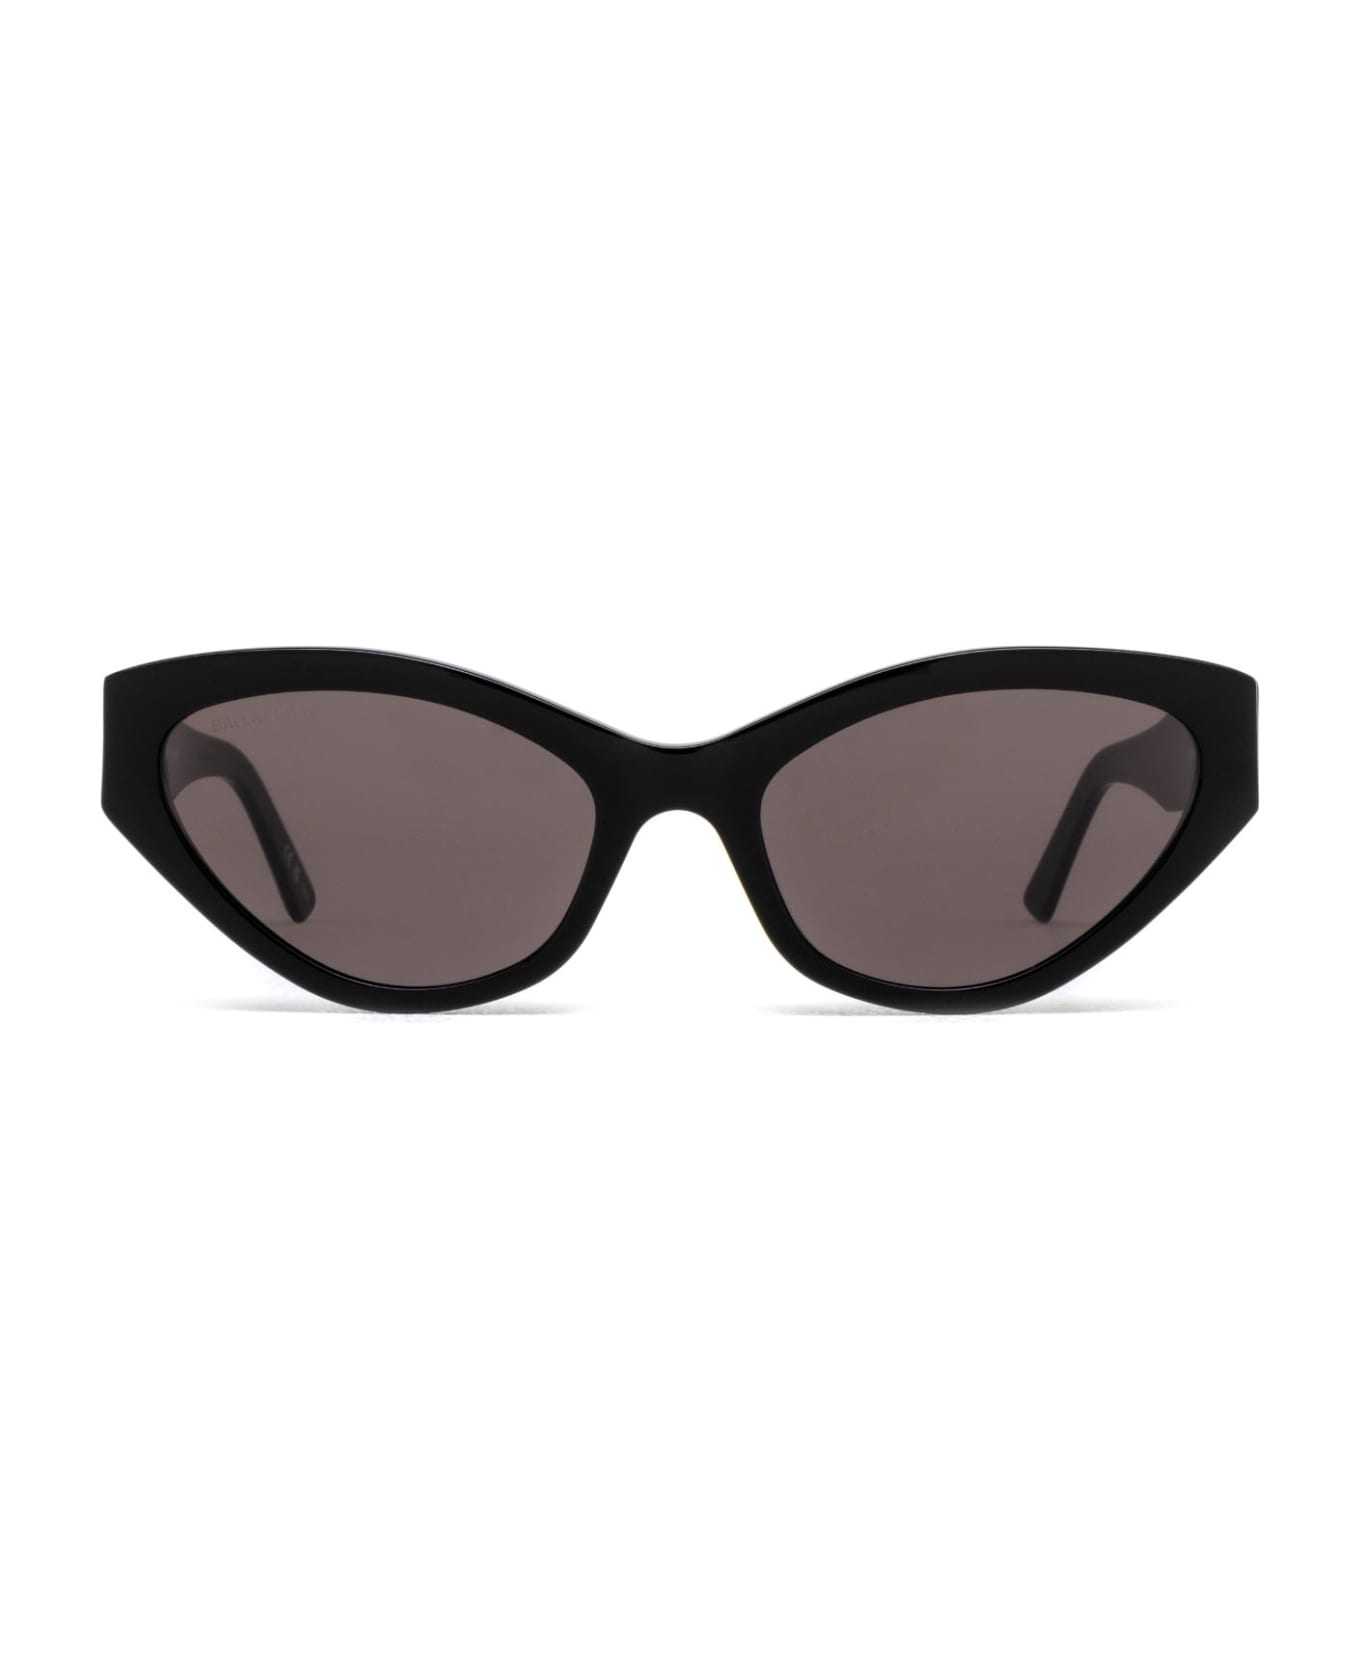 Balenciaga Eyewear Bb0306s Sunglasses - Black